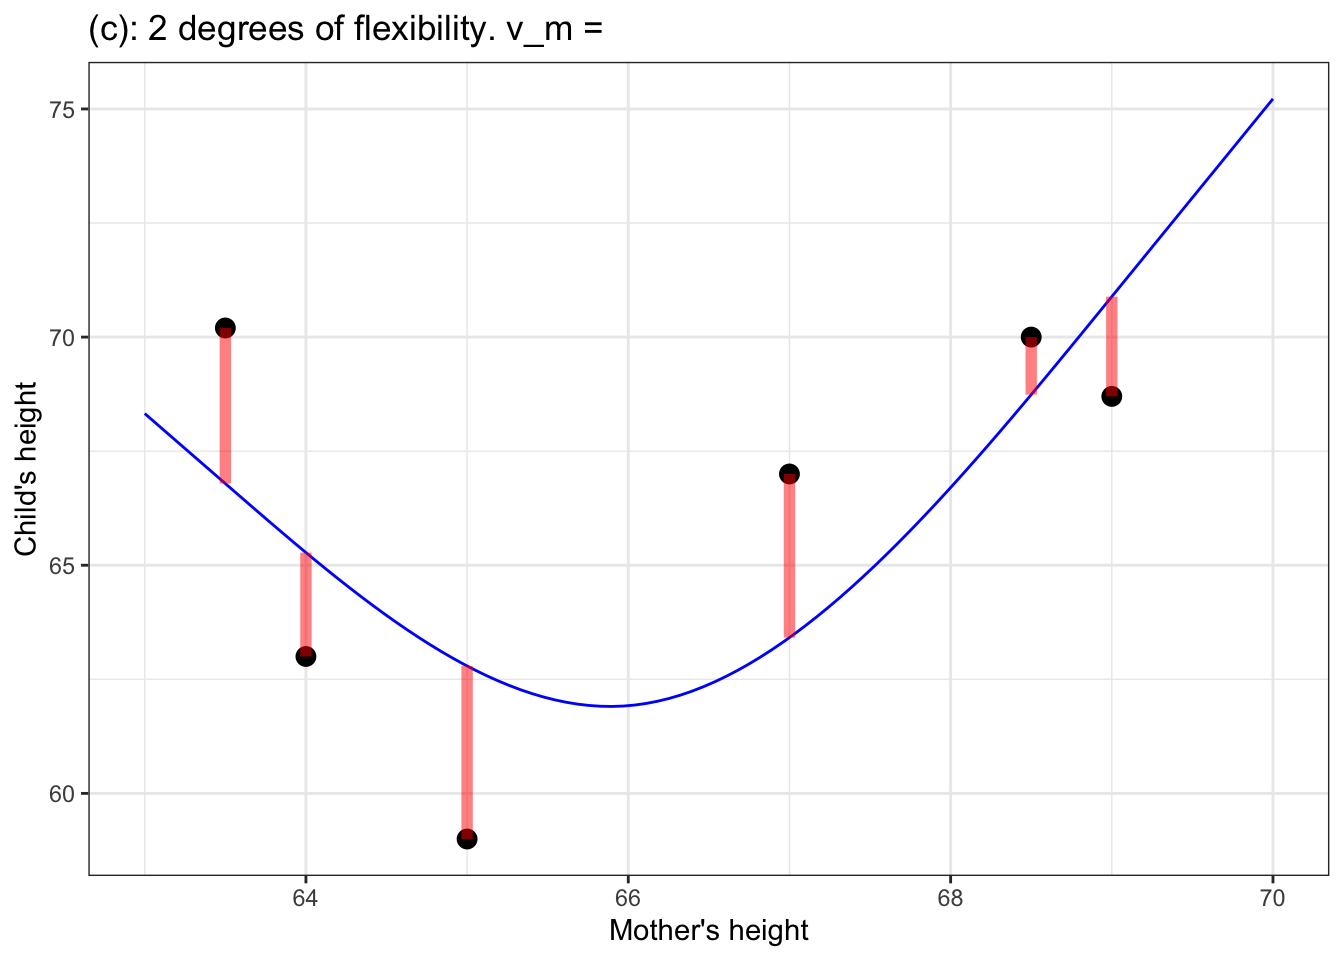 Figure 5: (a) a flat model – zero degrees of flexibility, \(\flex=0\); (b) a straight-line model – one degree of flexibility, \(\flex = 1\); (c) a model with one bend – two degrees of flexibility, \(\flex = 2\); (d) a model with two bends – three degrees of flexibility, \(\flex = 3\).